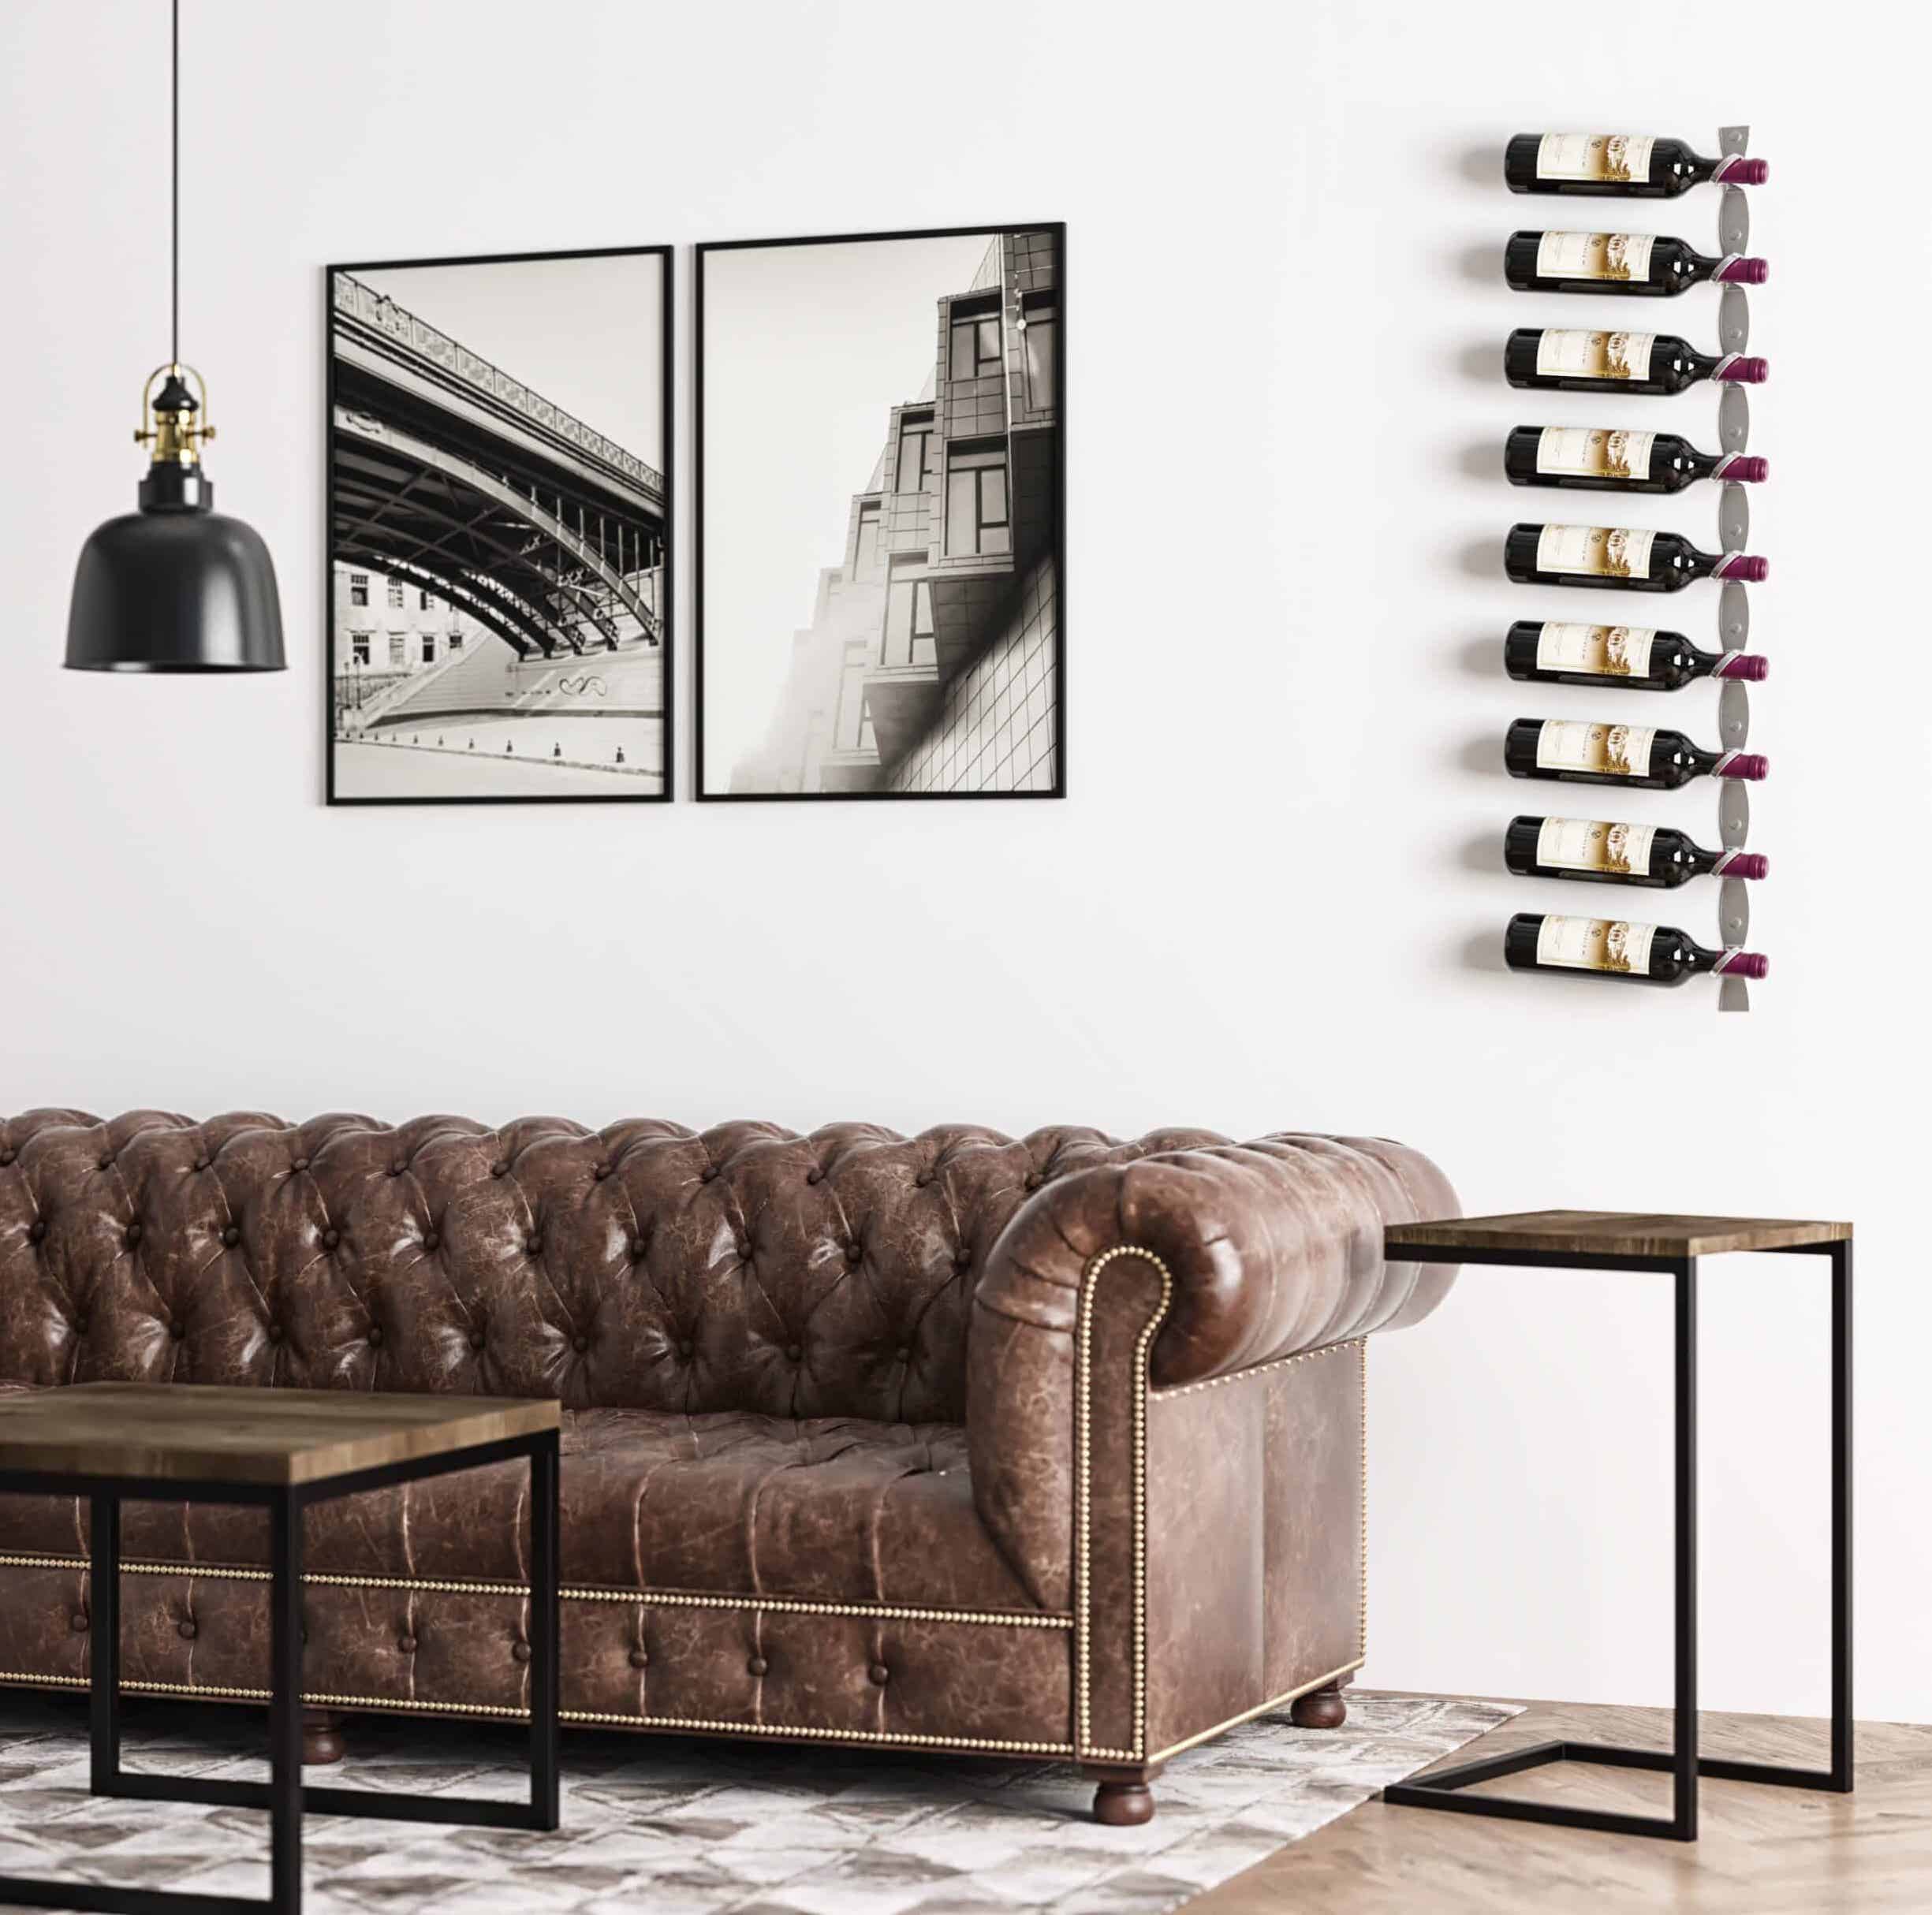 helix single 45 wall mounted metal wine rack in living room